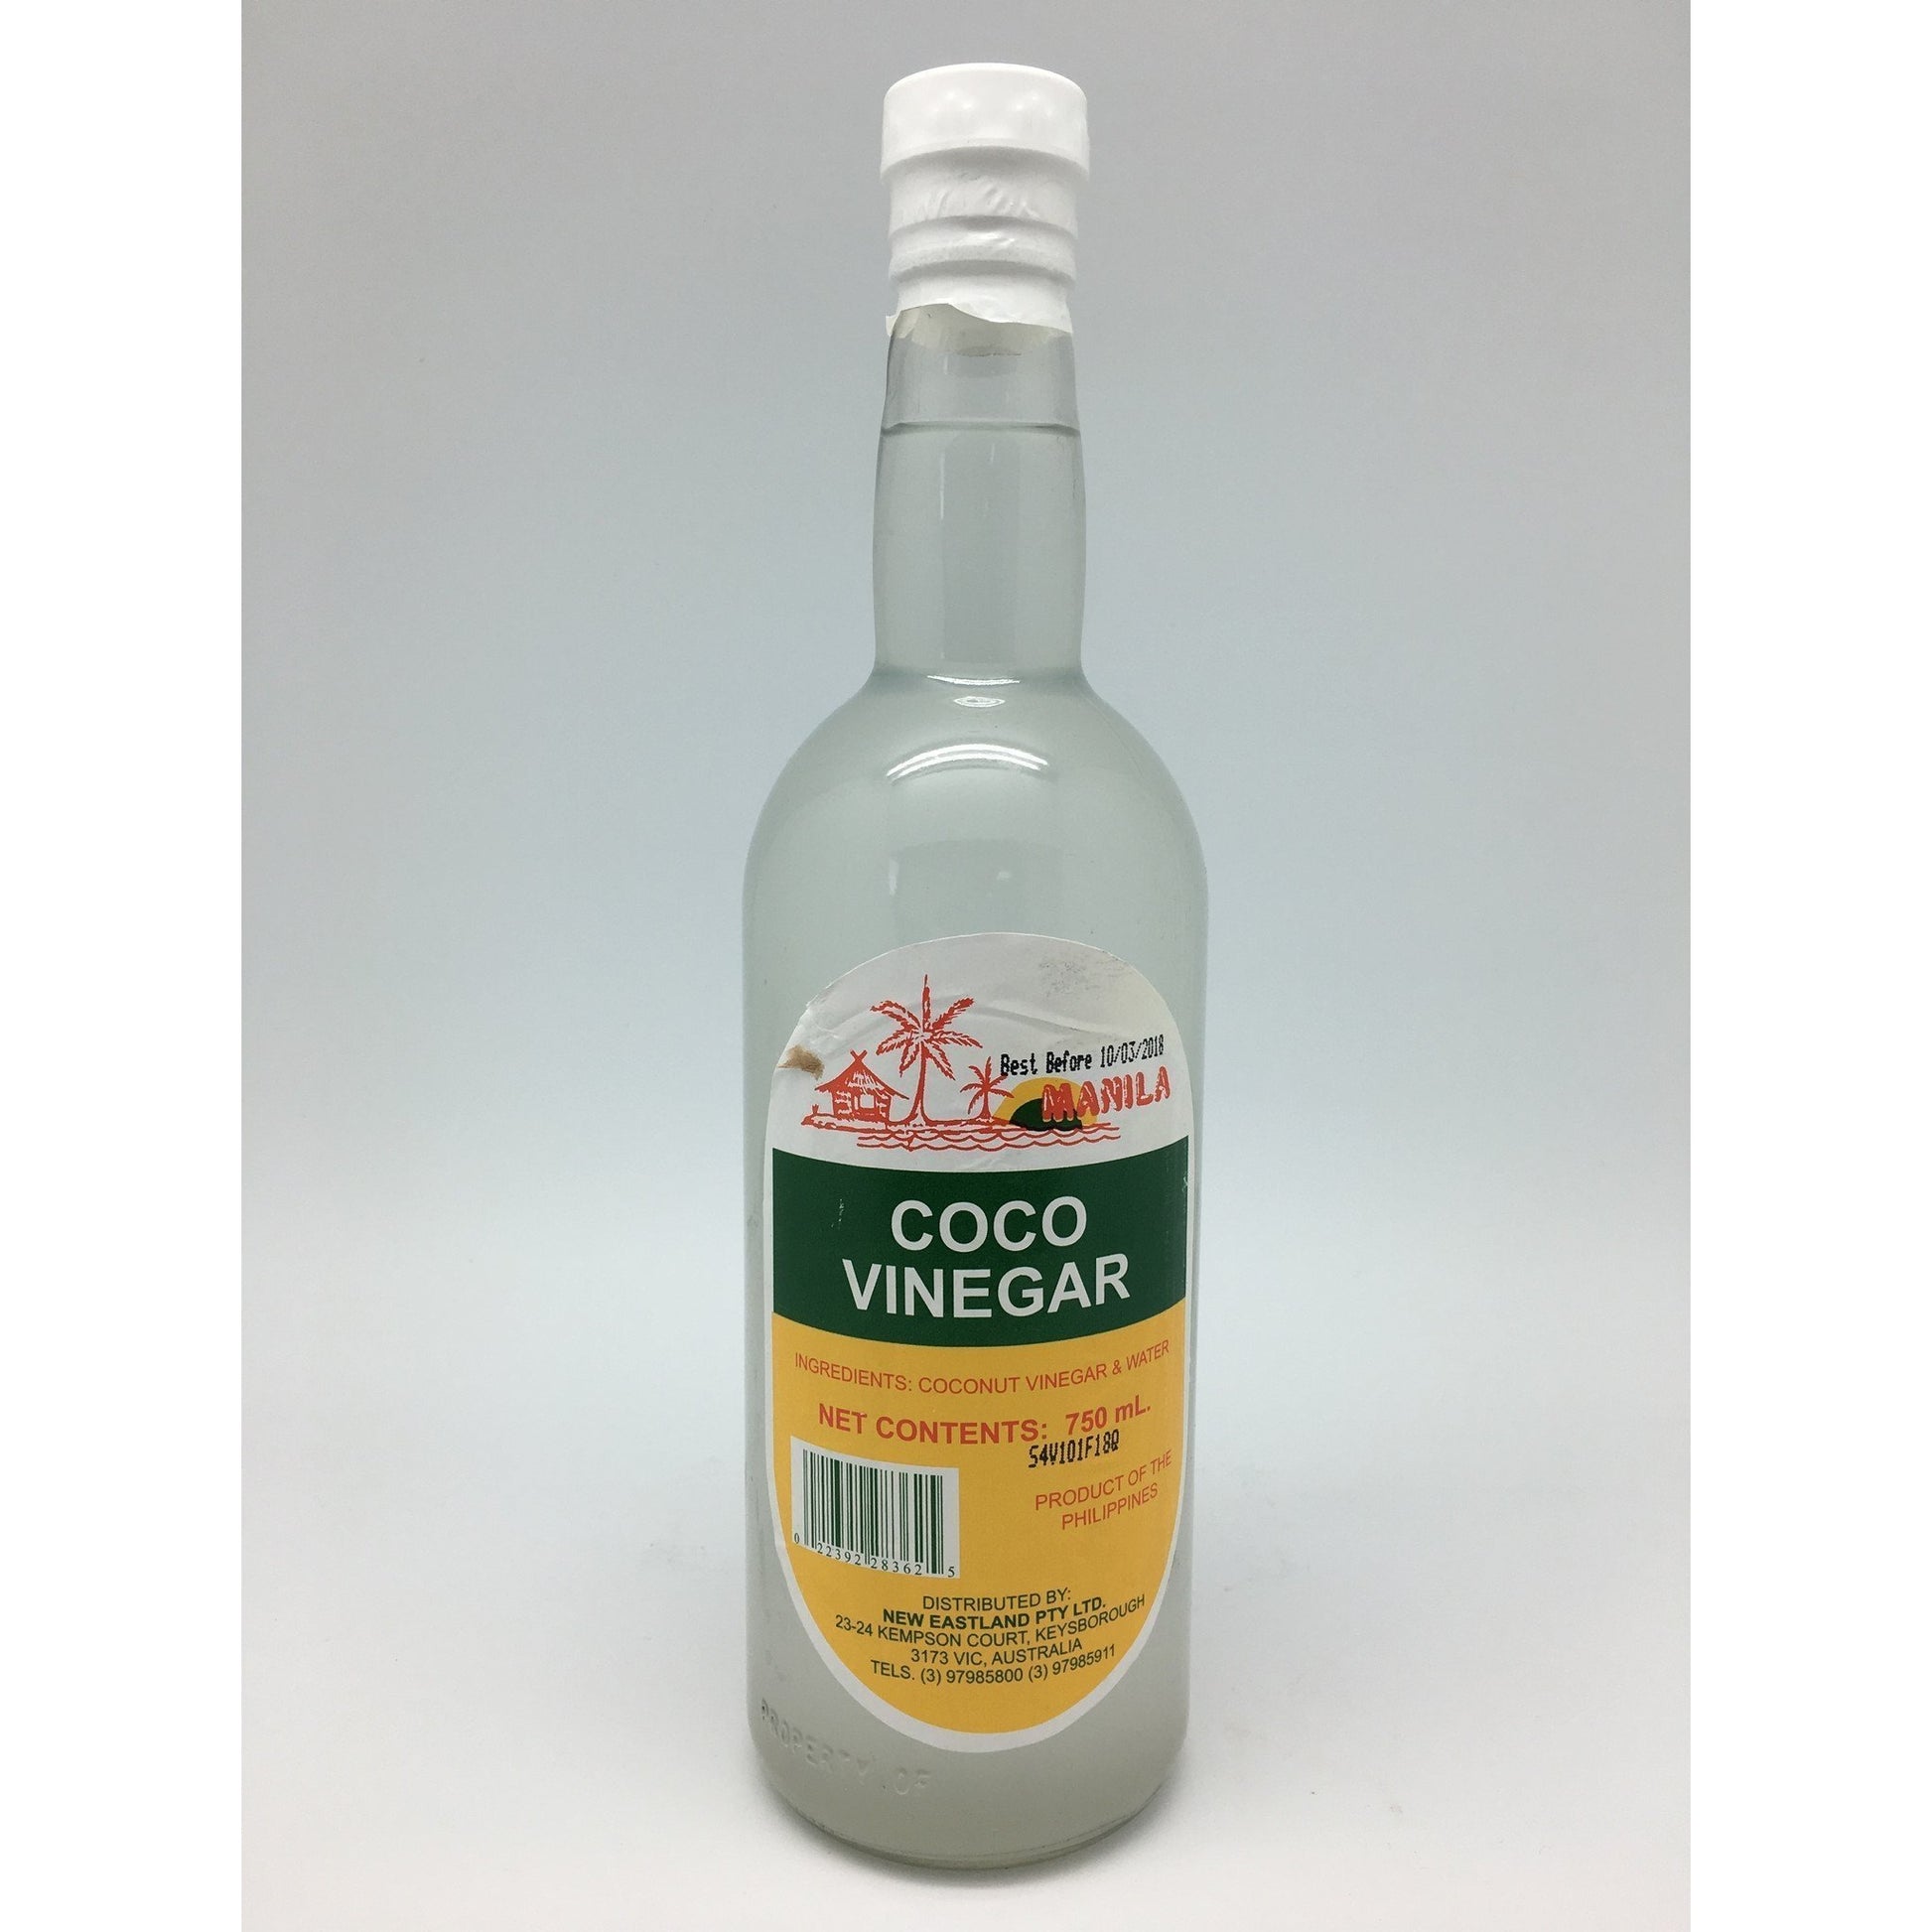 S110C Manila Brand - Coco Vinegar 750ml - 12 bot / 1CTN - New Eastland Pty Ltd - Asian food wholesalers